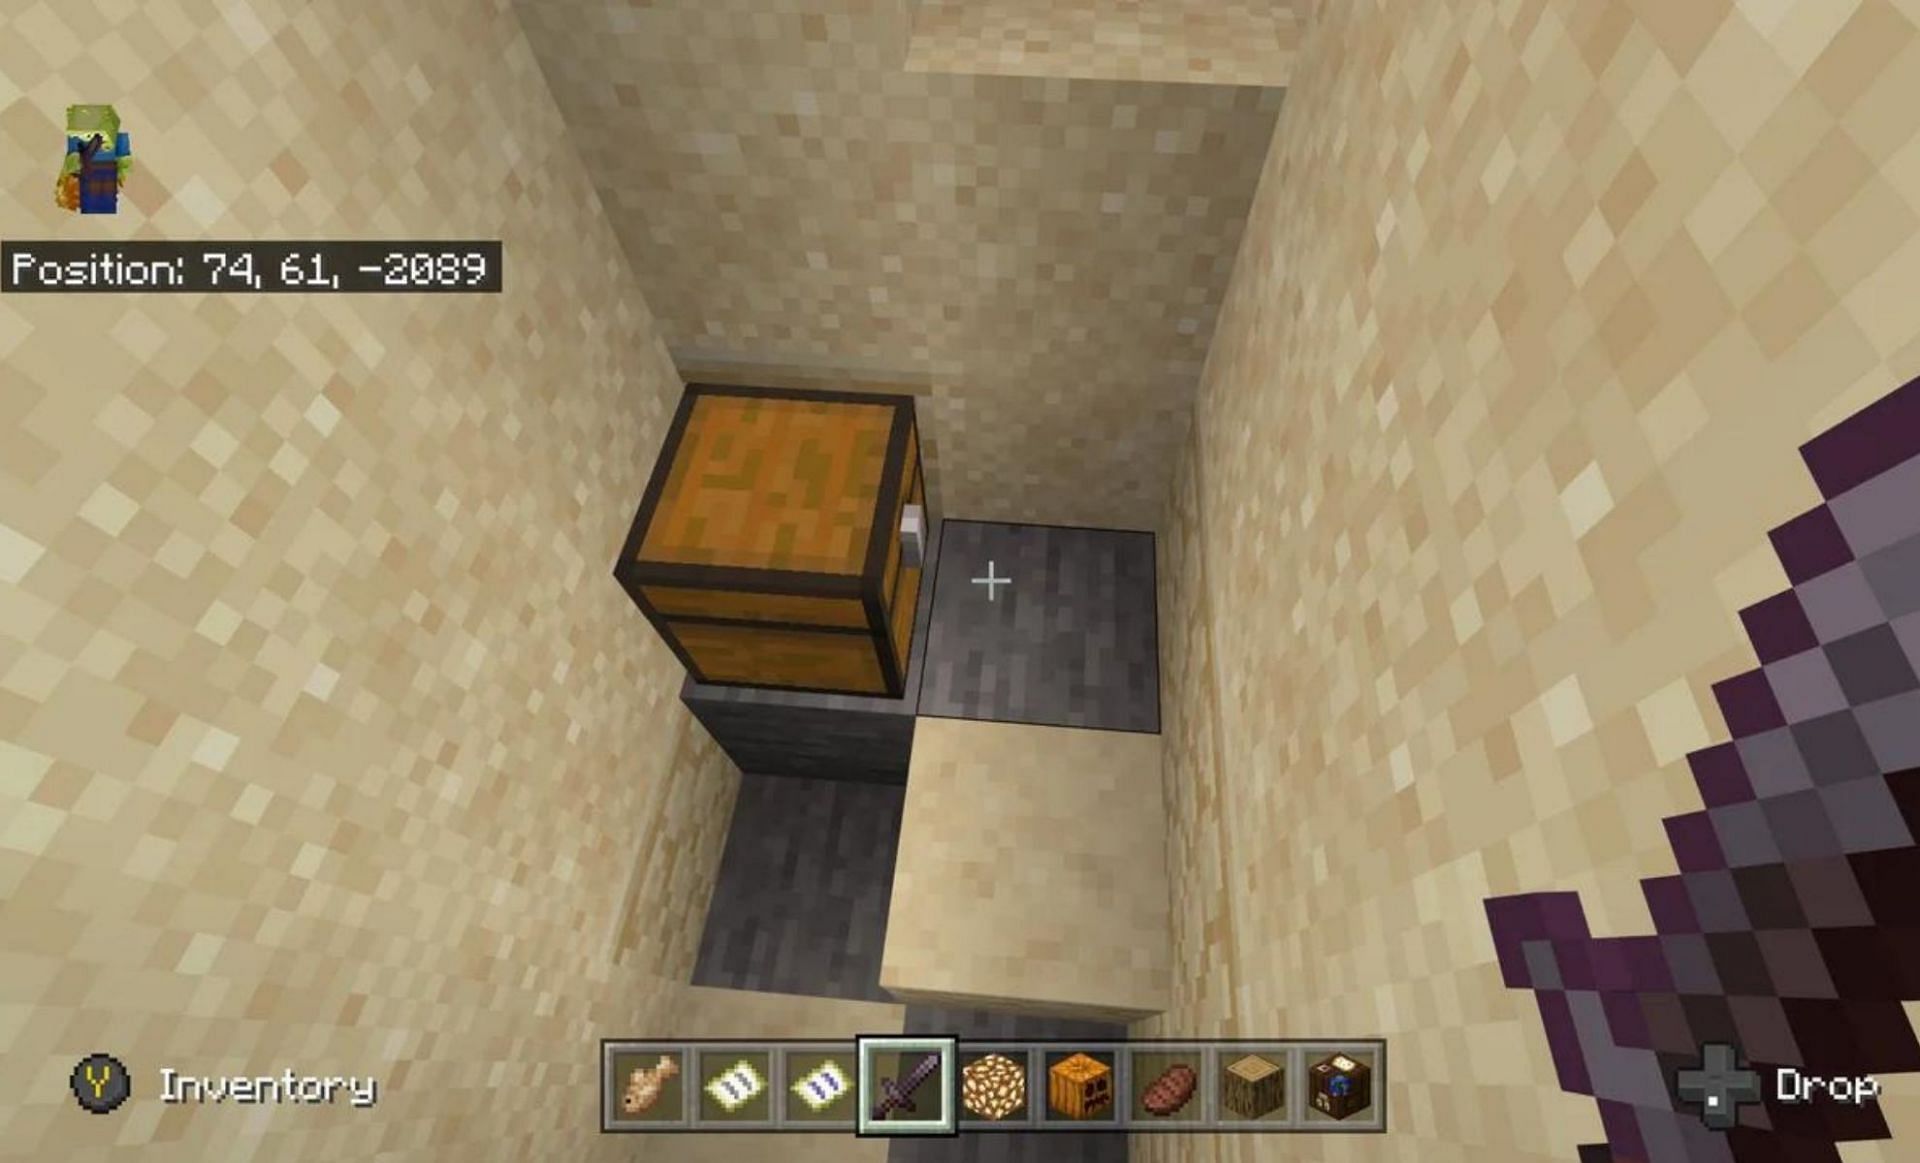 Treasure chest (Image via Mojang)